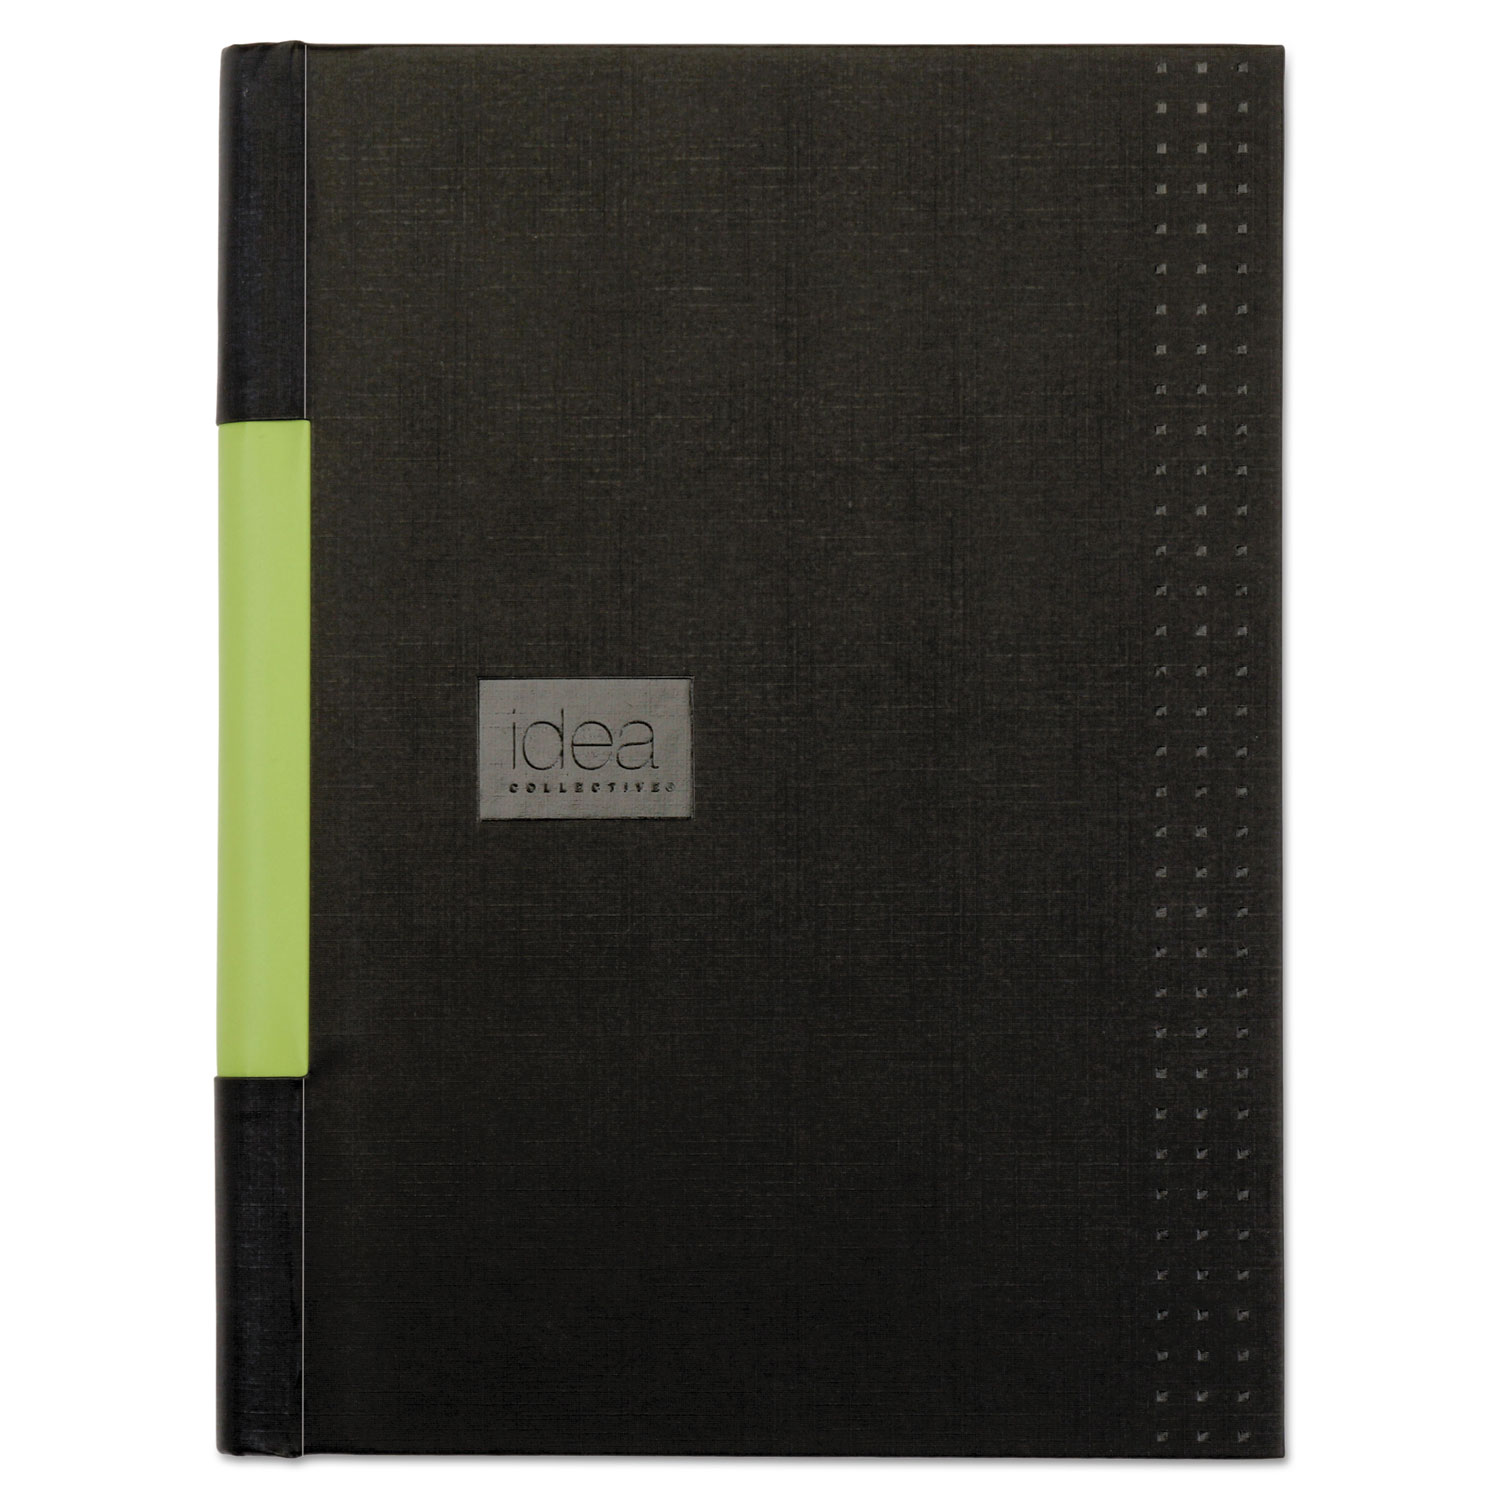 Idea Collective Professional Casebound Hardcover Notebook, 8 1/4 x 5 7/8, Black